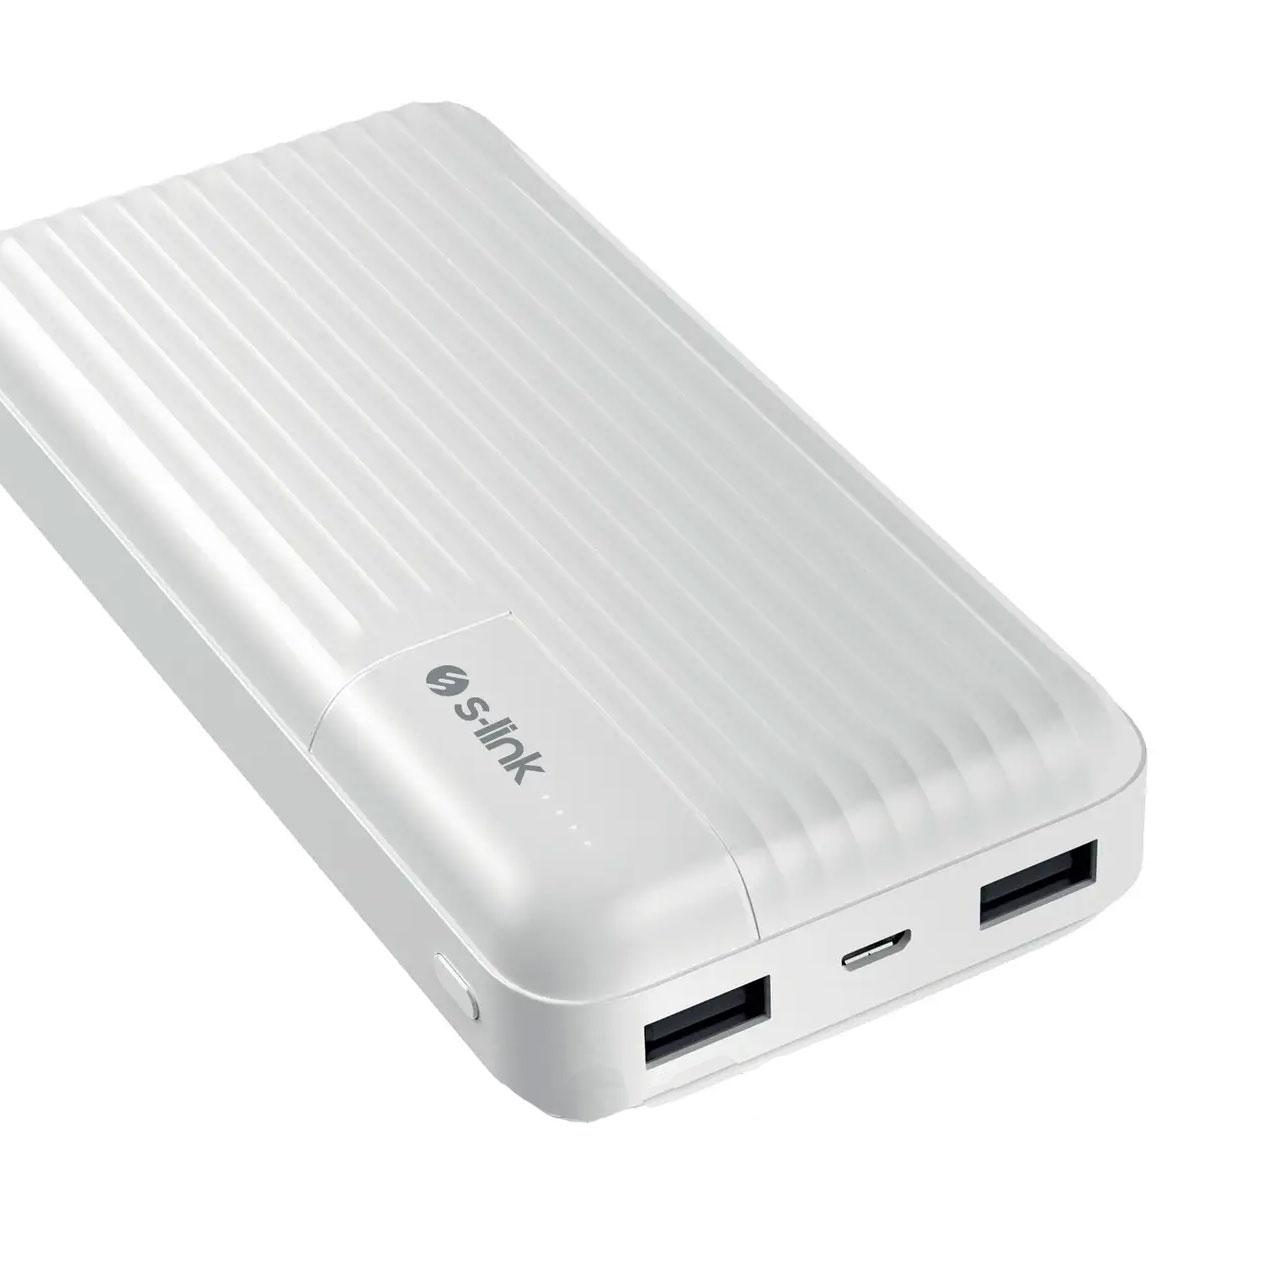 Powerbank S-link G - 201 20000 mah 2 USB